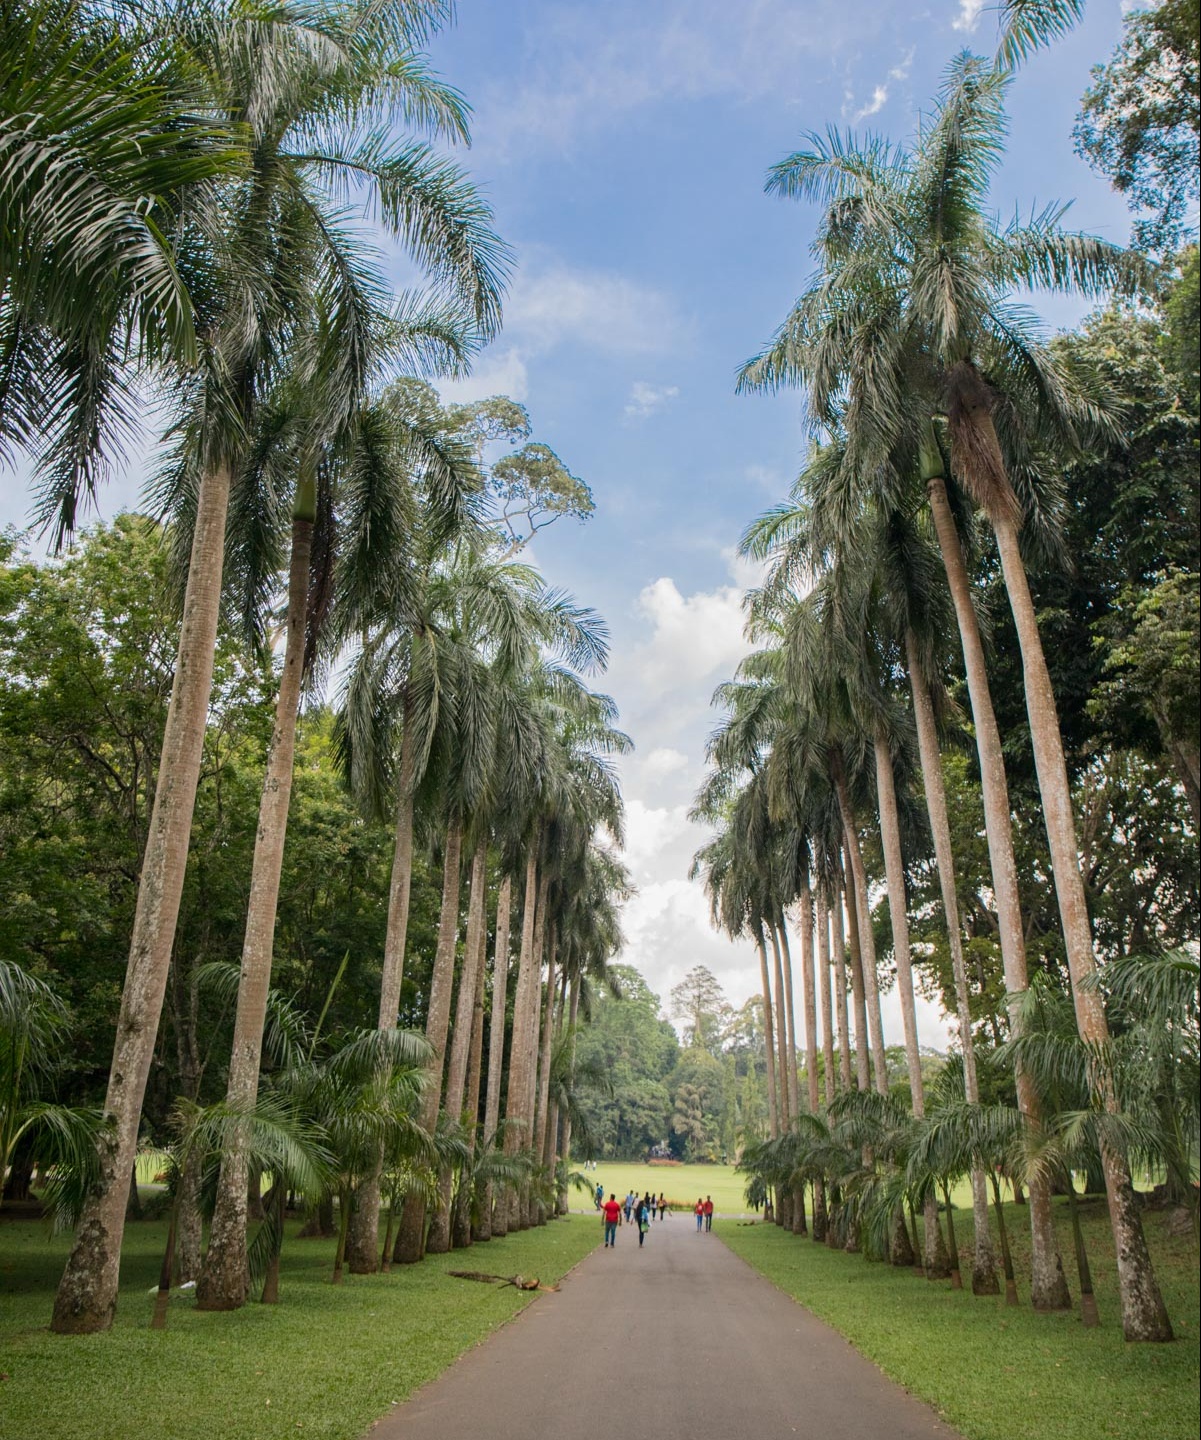 Palm Avenue in the Royal Botanical Gardens (Peradeniya Park), Kandy, Sri Lanka. Photographed by Shika Finnemore - thebellephant.com